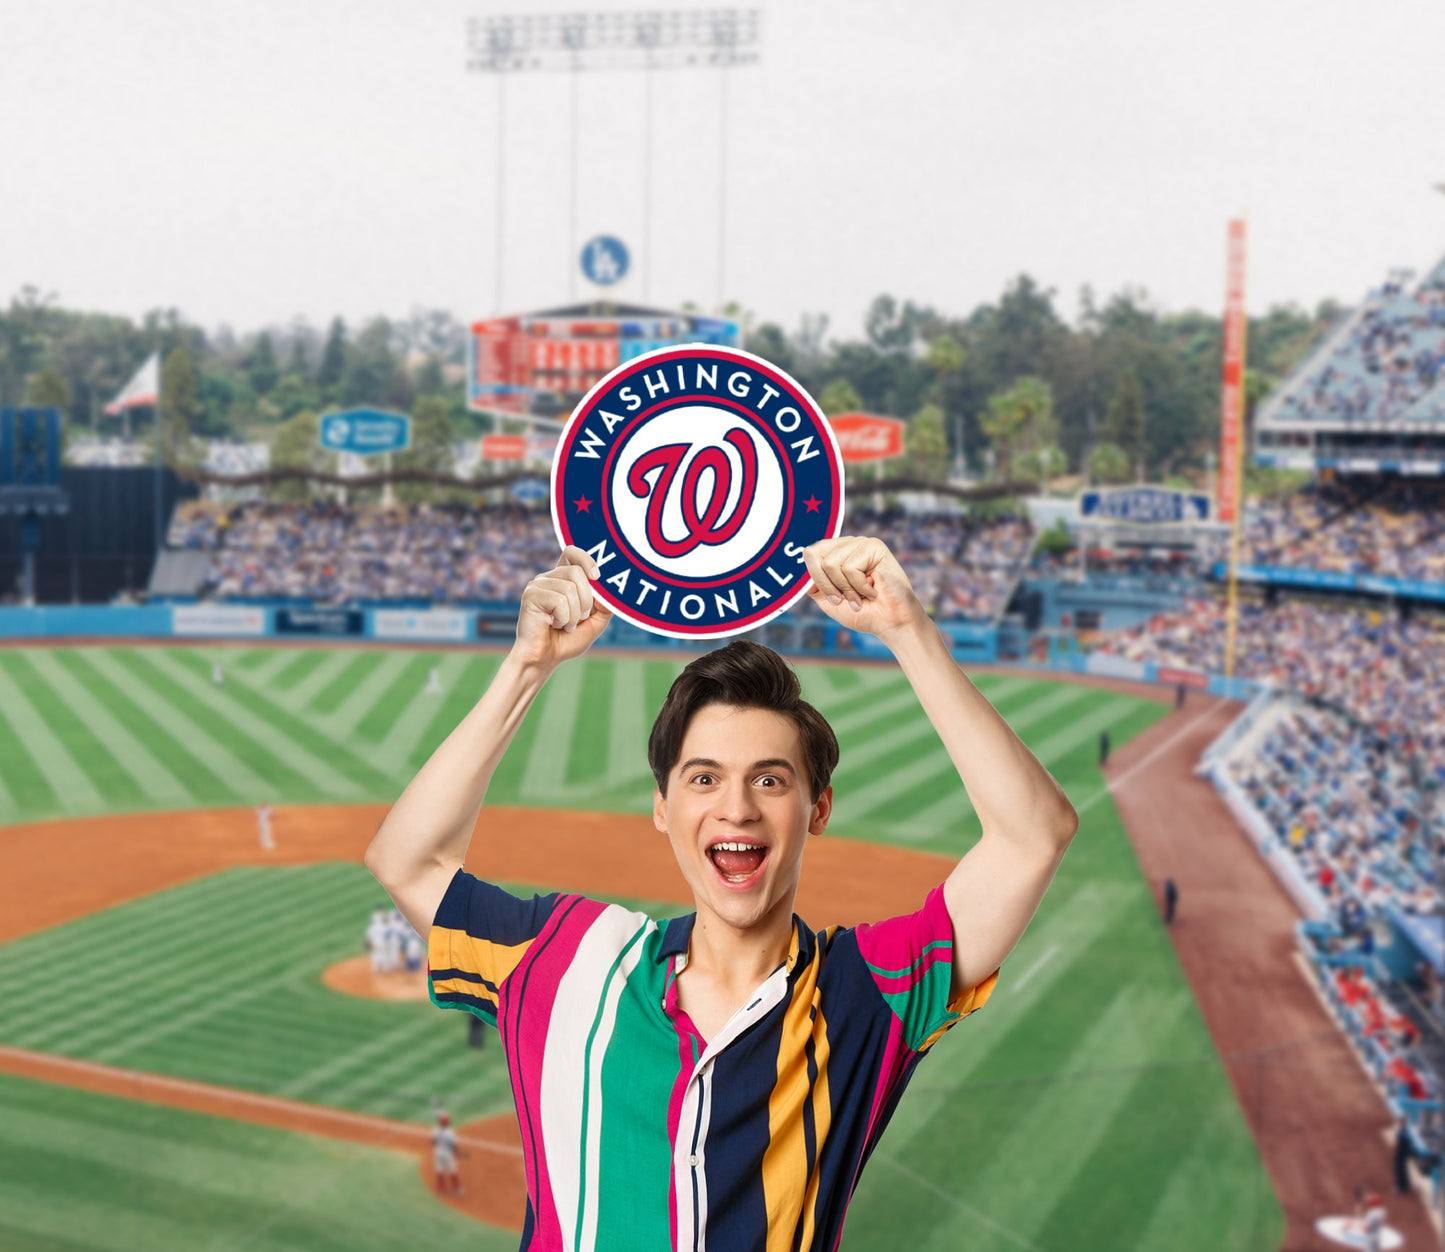 Washington Nationals: Logo Foam Core Cutout - Officially Licensed MLB Big Head